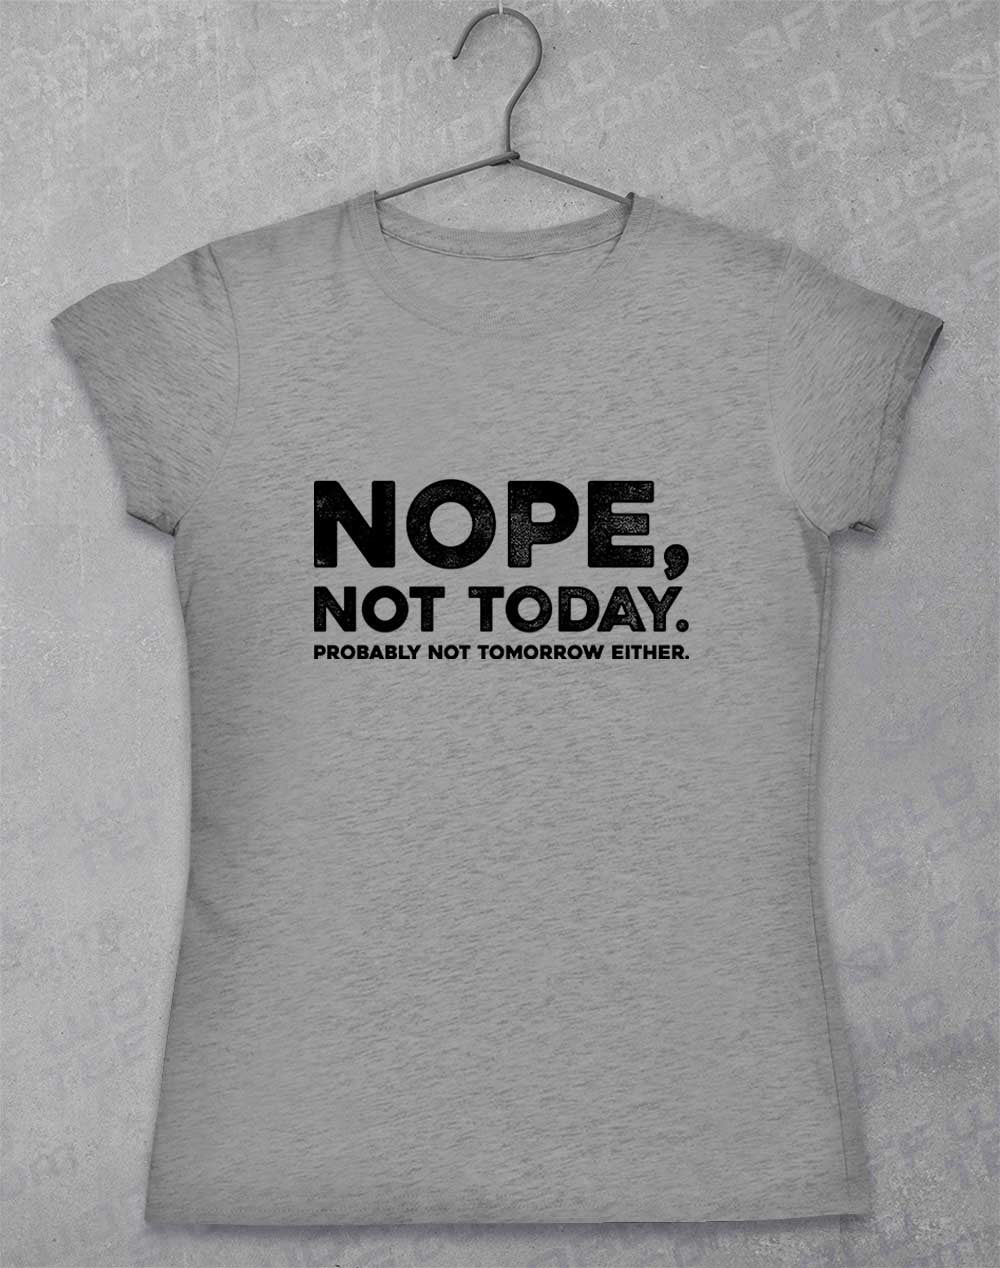 Sport Grey - Nope Not Today Women's T-Shirt